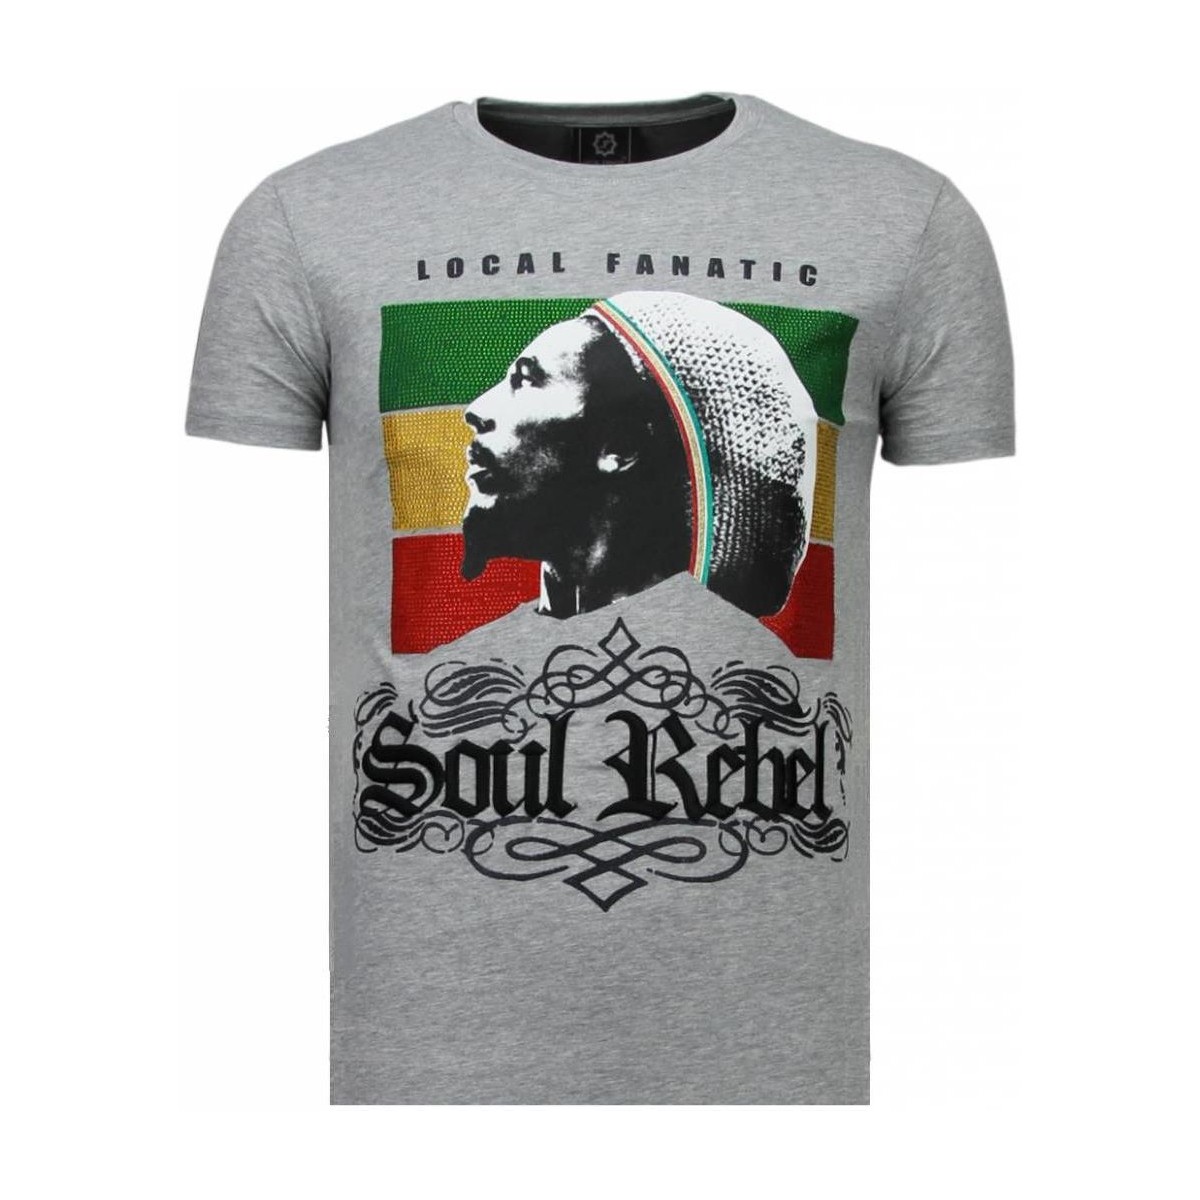 textil Herr T-shirts Local Fanatic Soul Rebel Bob Rhinestone Grå